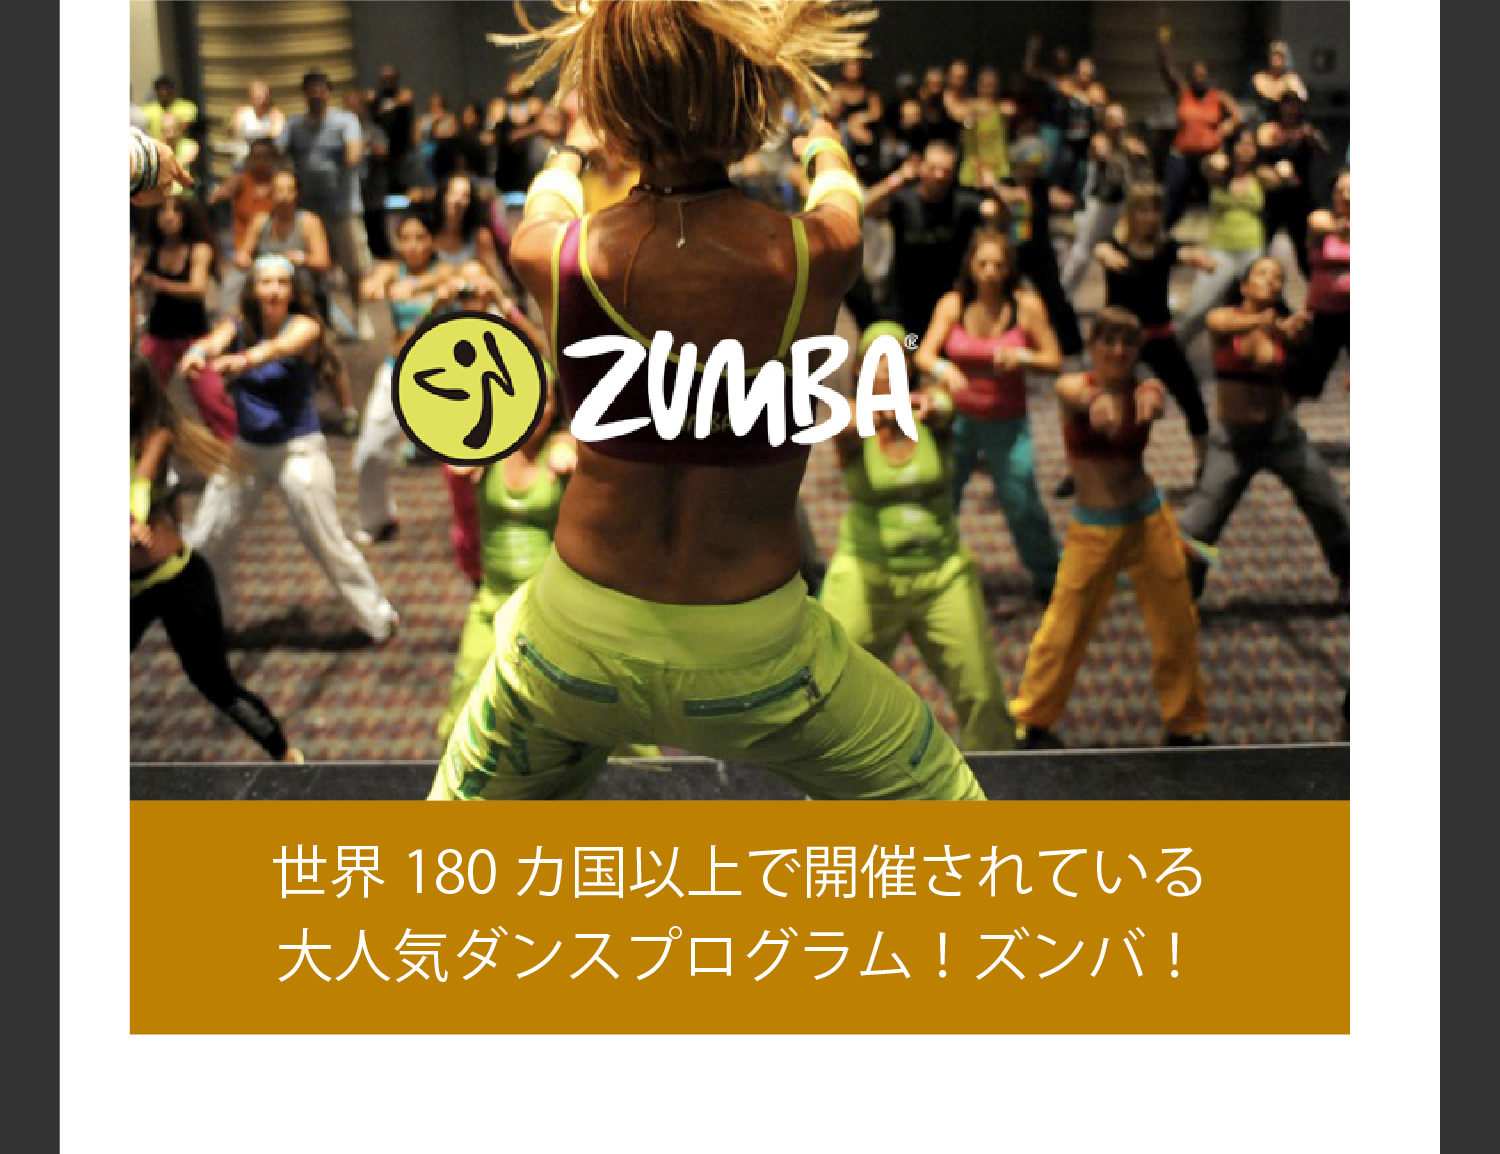 ZUMBA 世界180ヵ国以上で開催されている大人気ダンスプログラム！ズンバ！